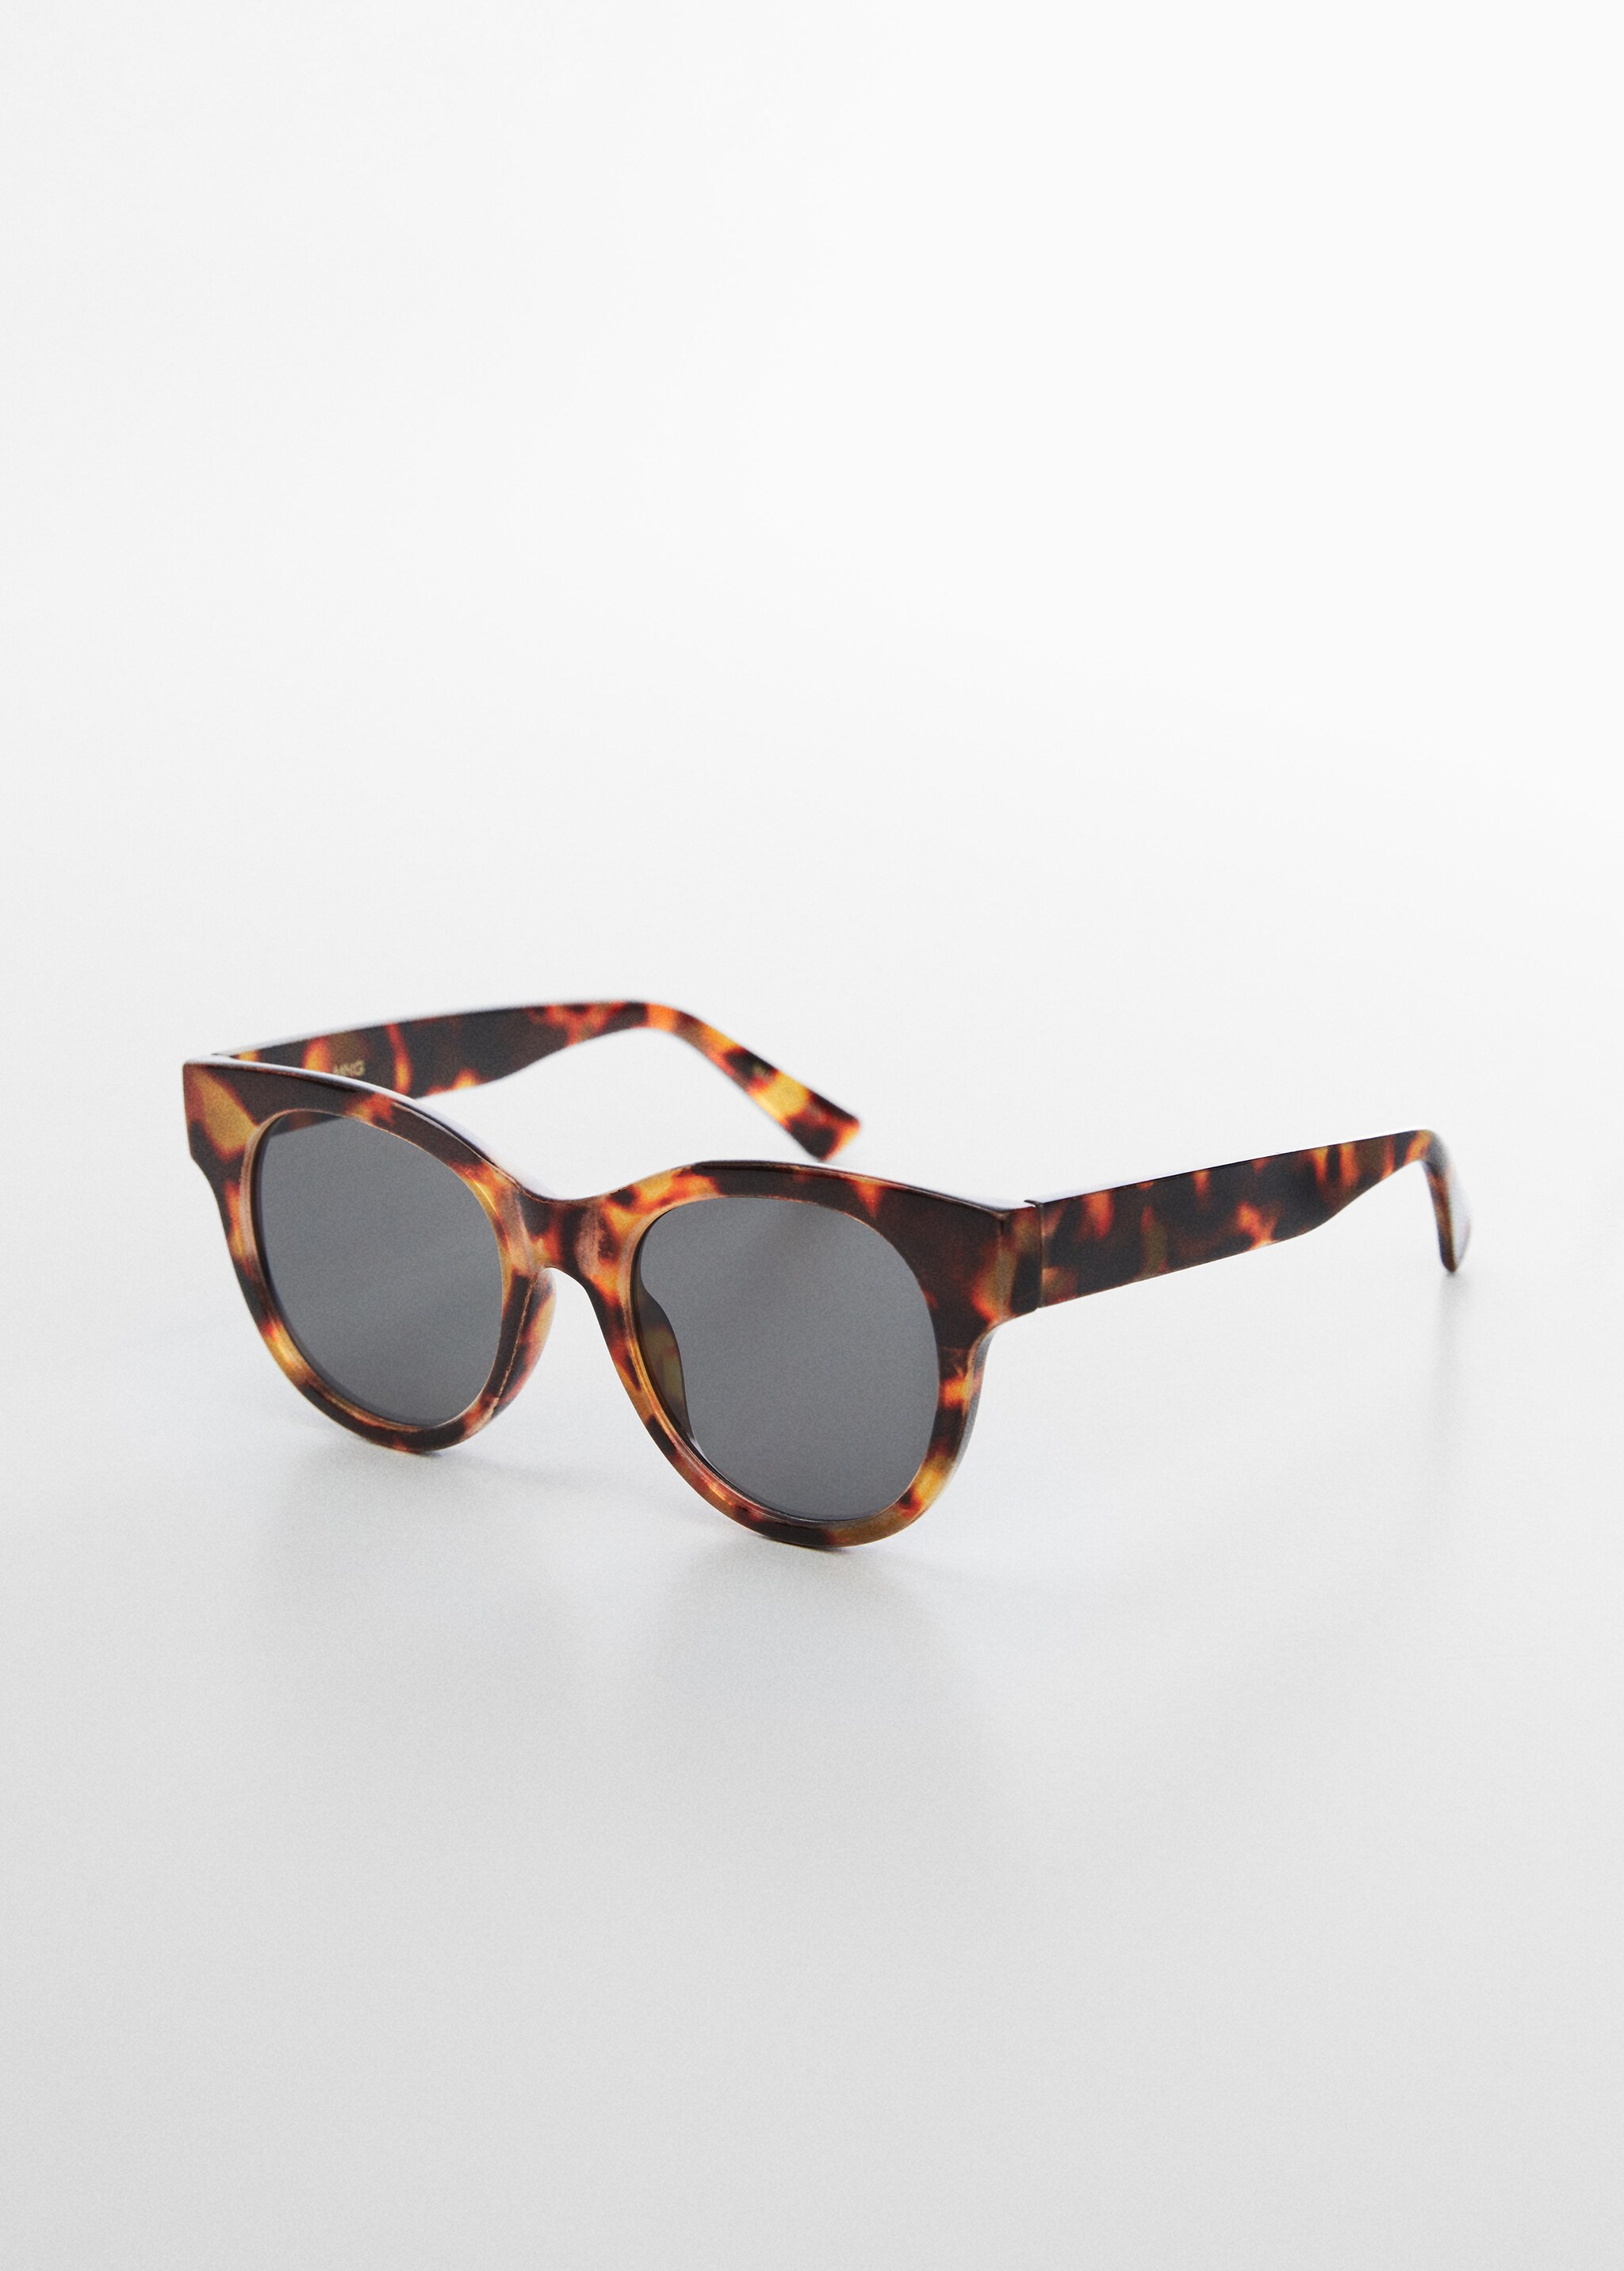 Tortoiseshell sunglasses - Medium plane